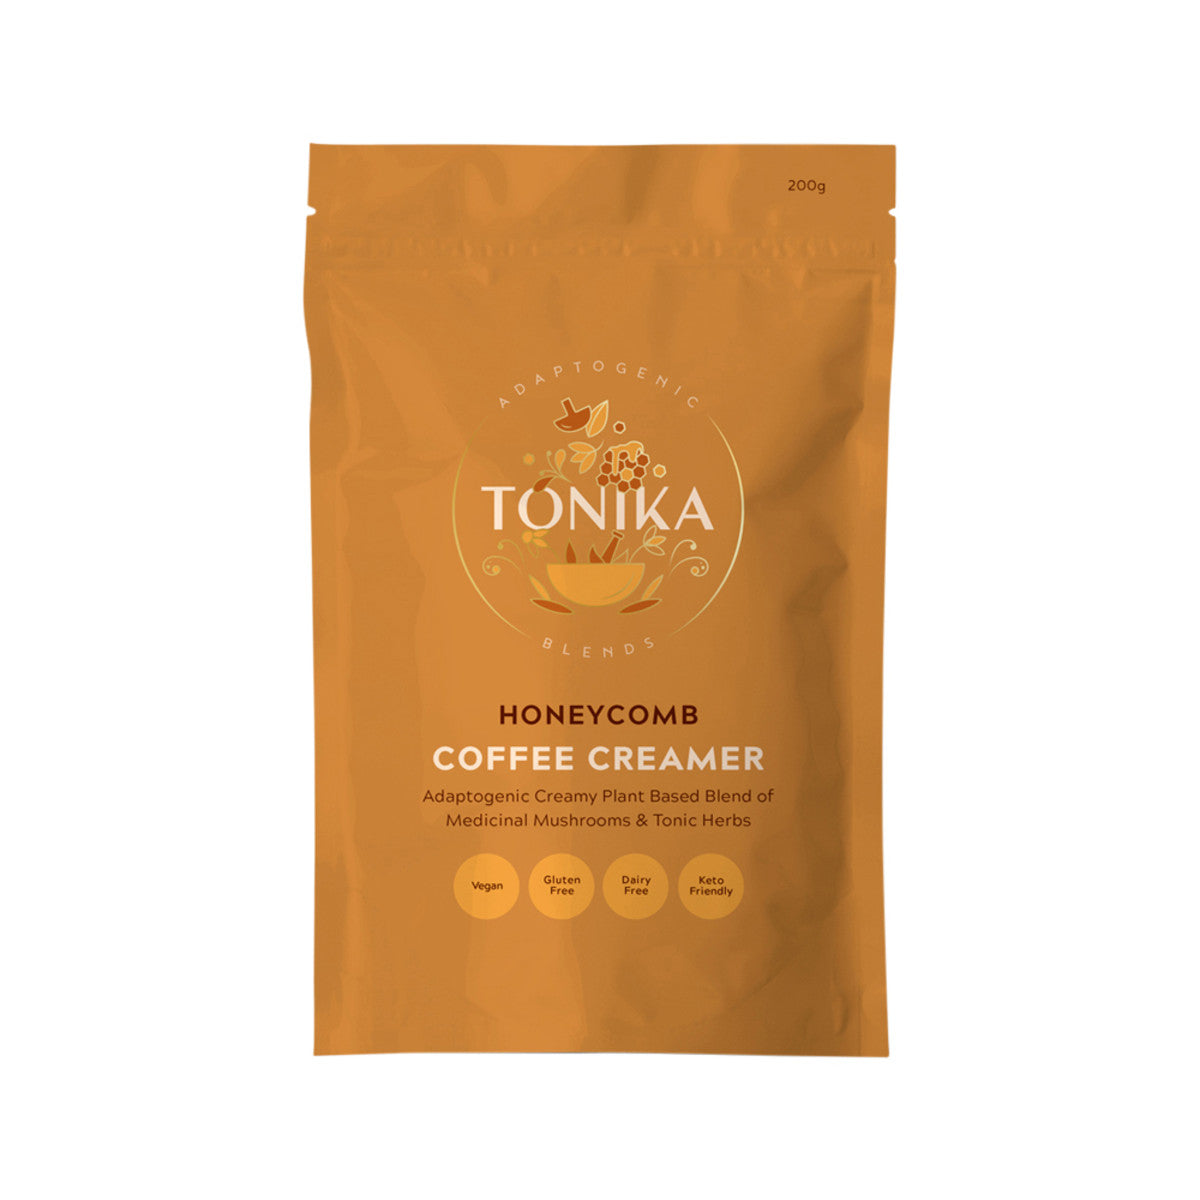 Tonika Coffee Creamer Honeycomb 200g